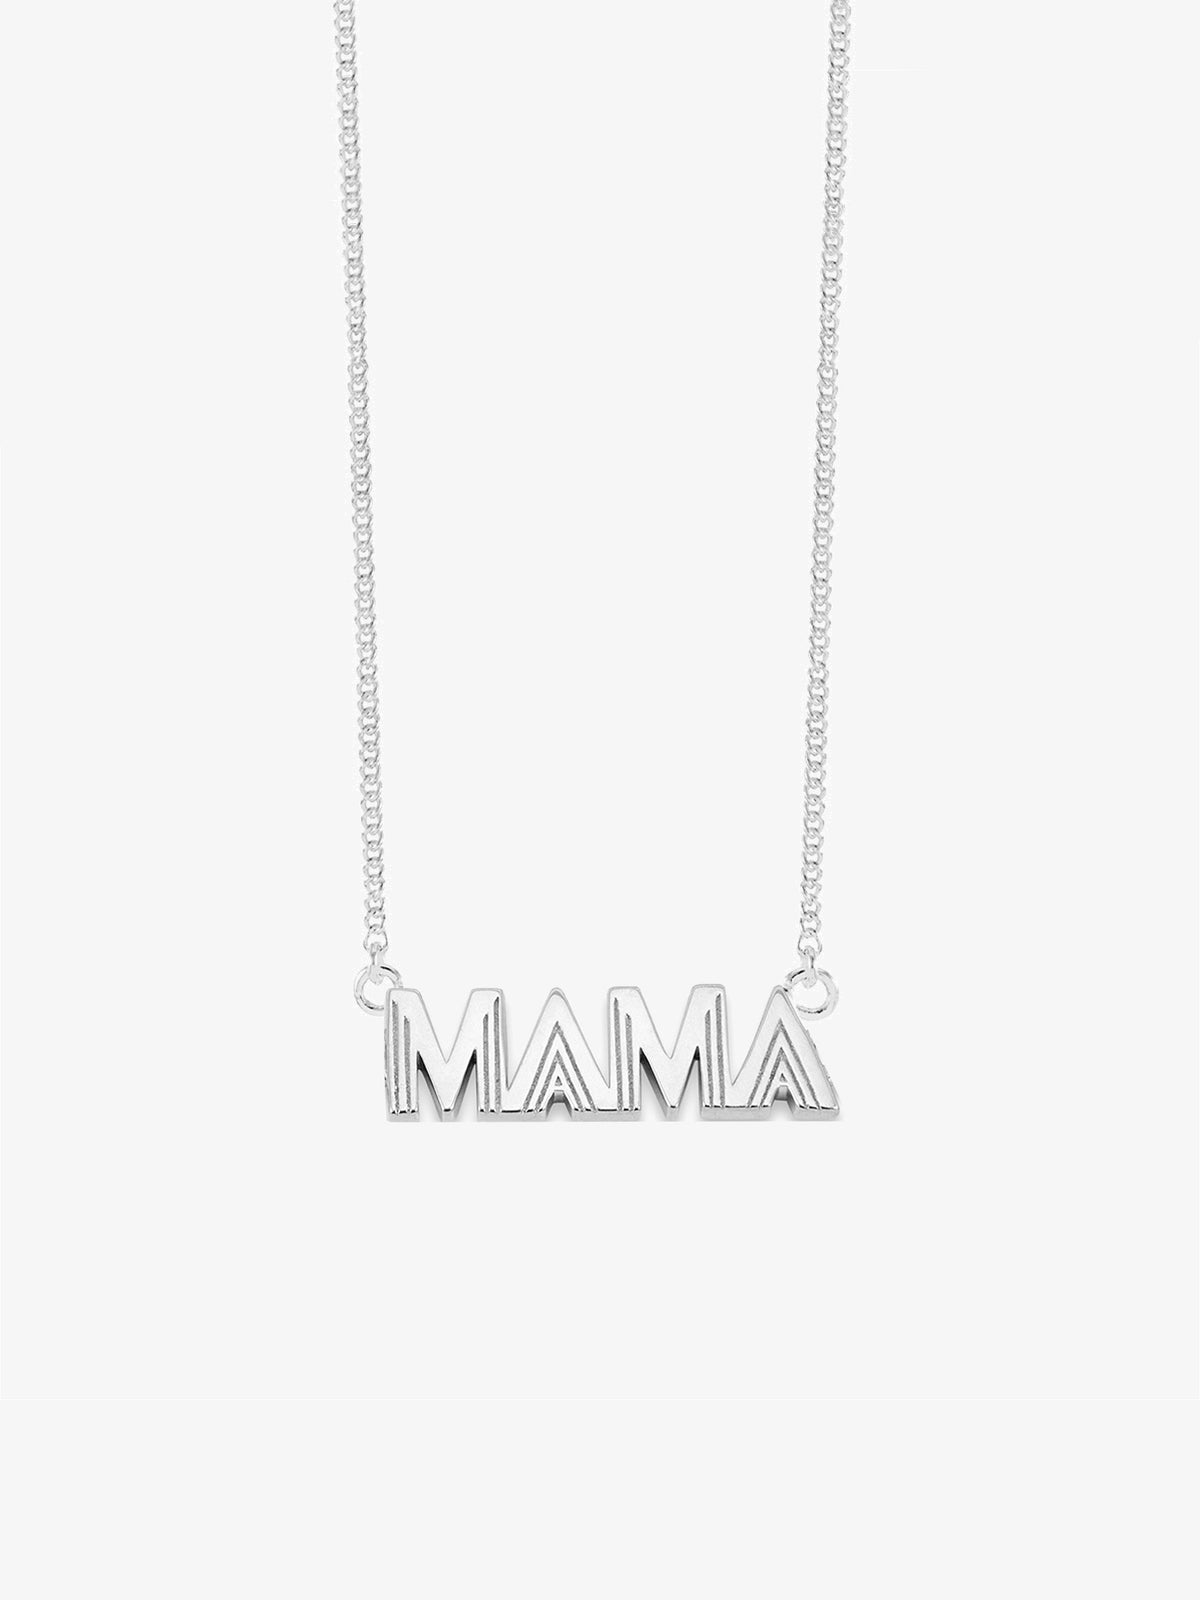 Art Deco Mama Necklace